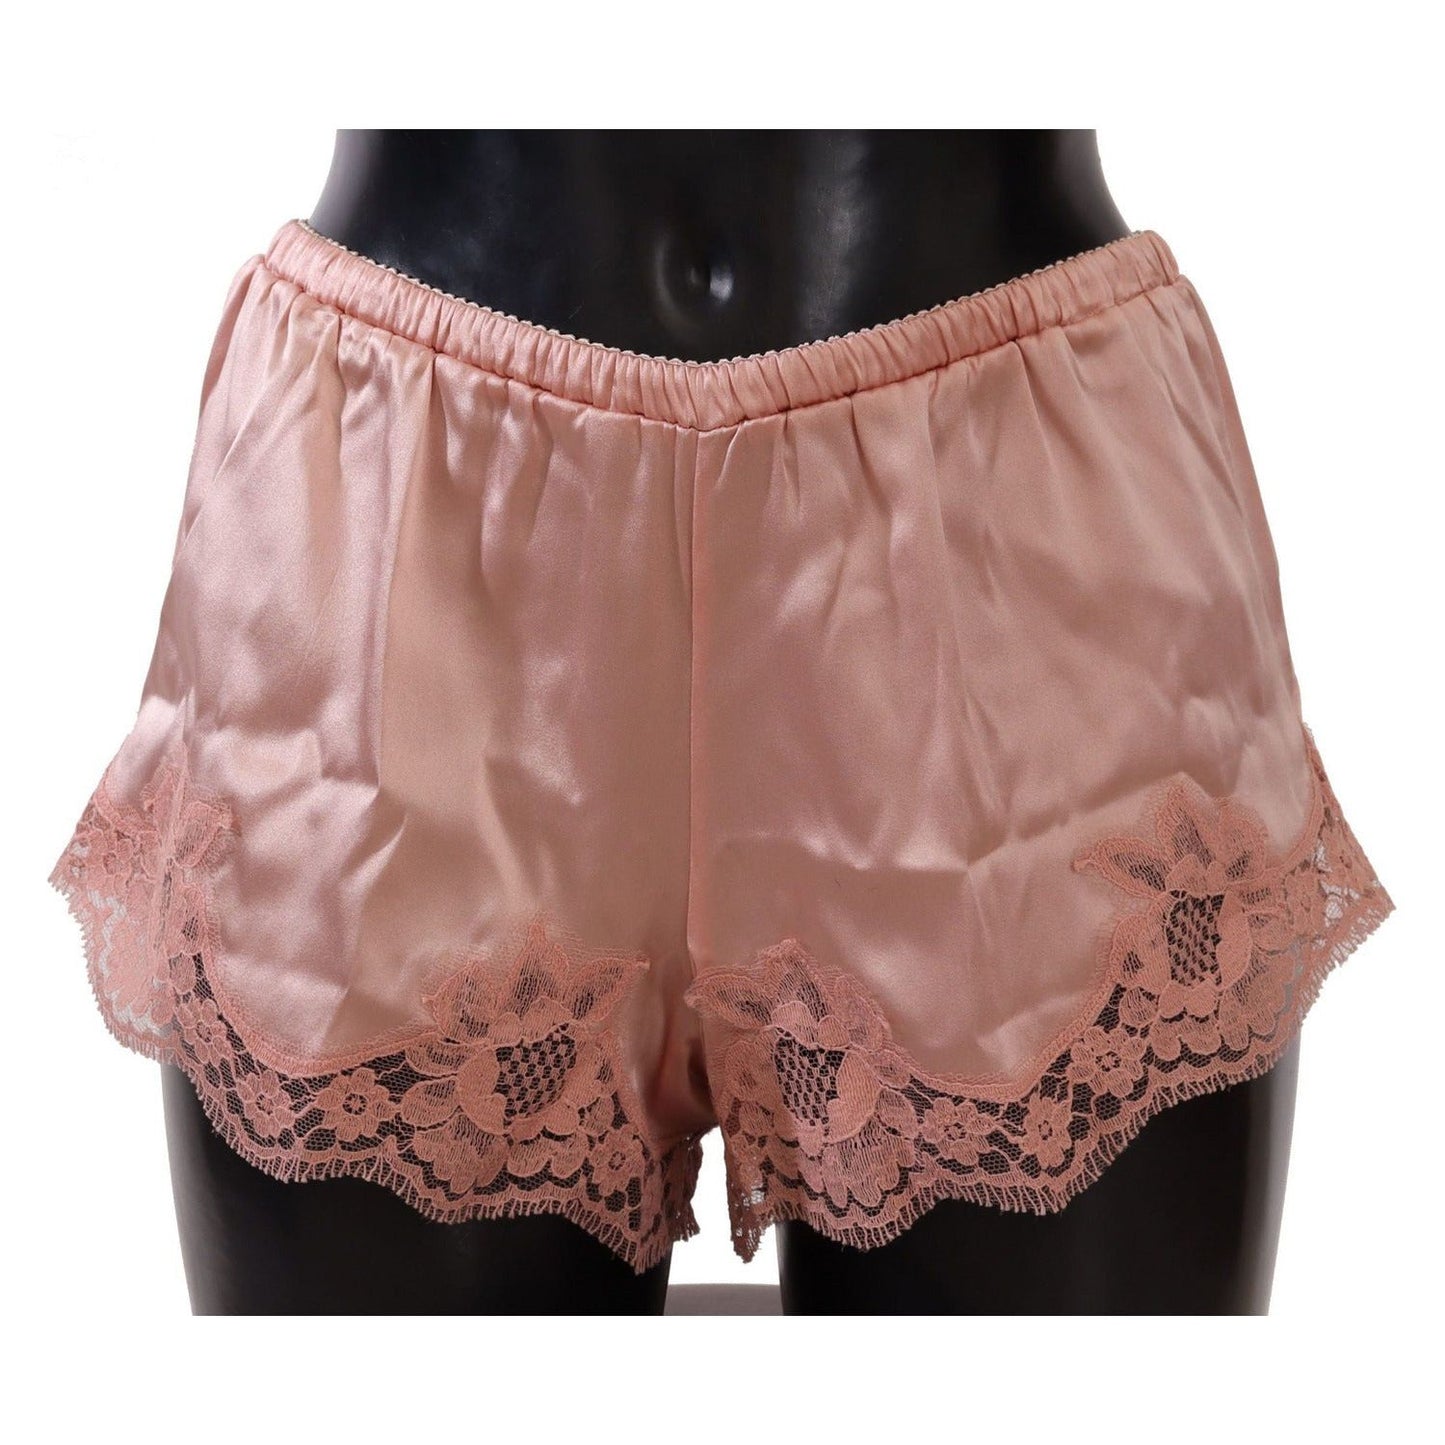 Dolce & Gabbana Elegant Powder Pink Silk Lace Lingerie Shorts WOMAN UNDERWEAR pink-floral-lace-lingerie-underwear